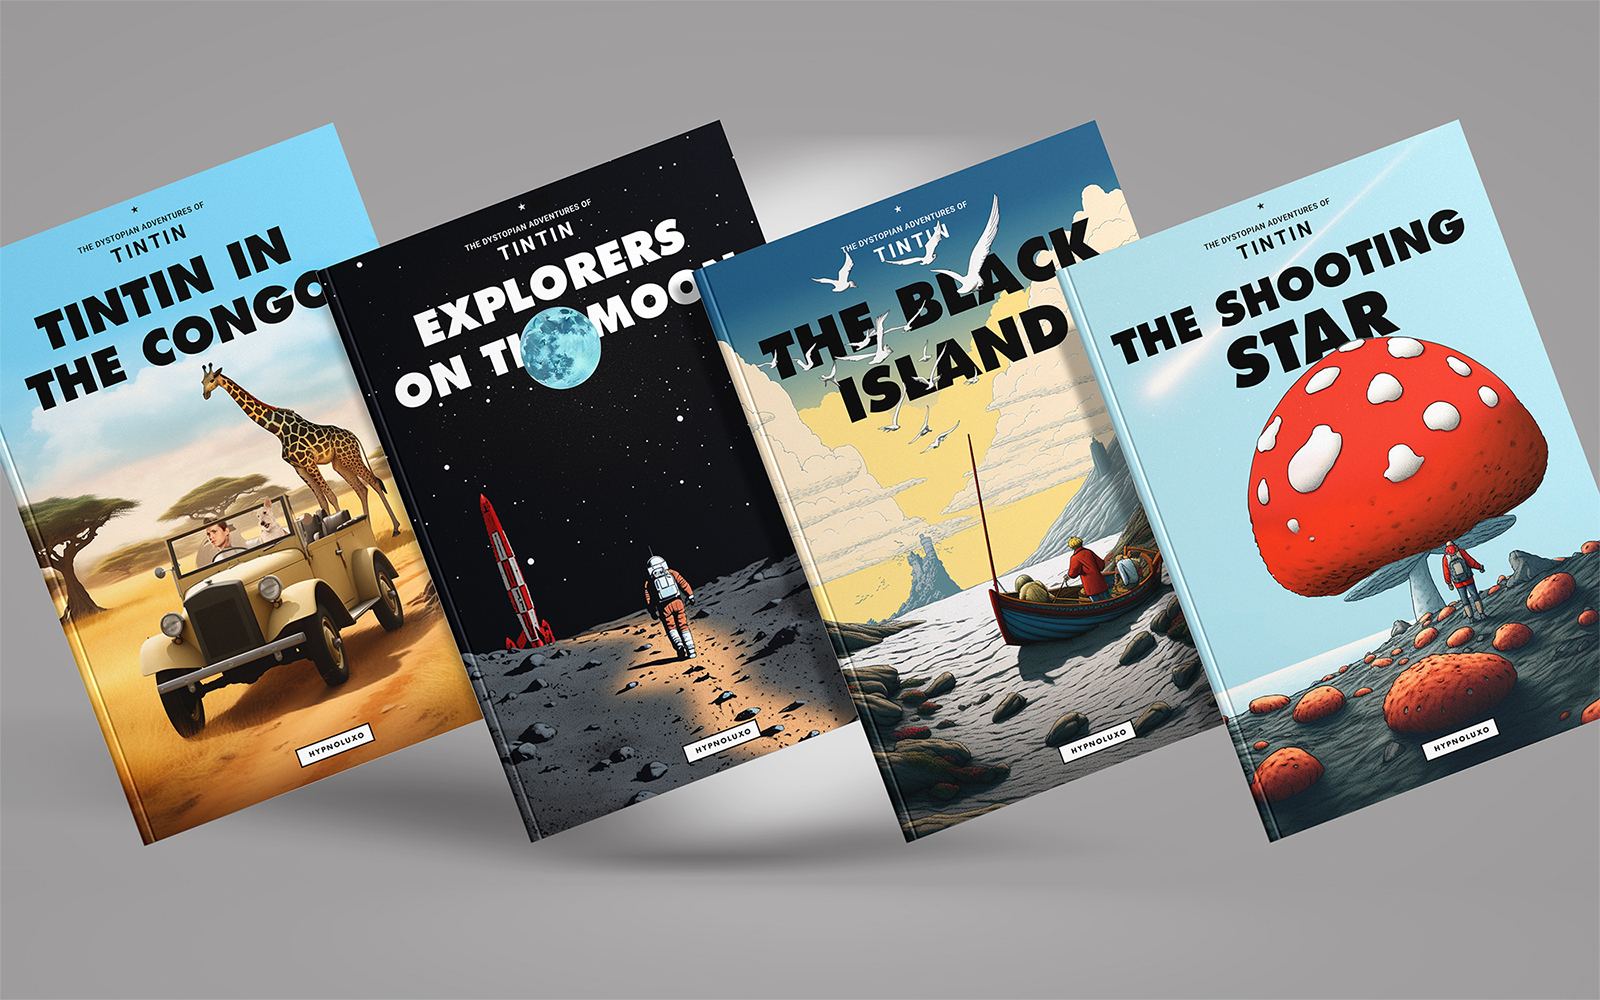 Dystopian Tintin covers